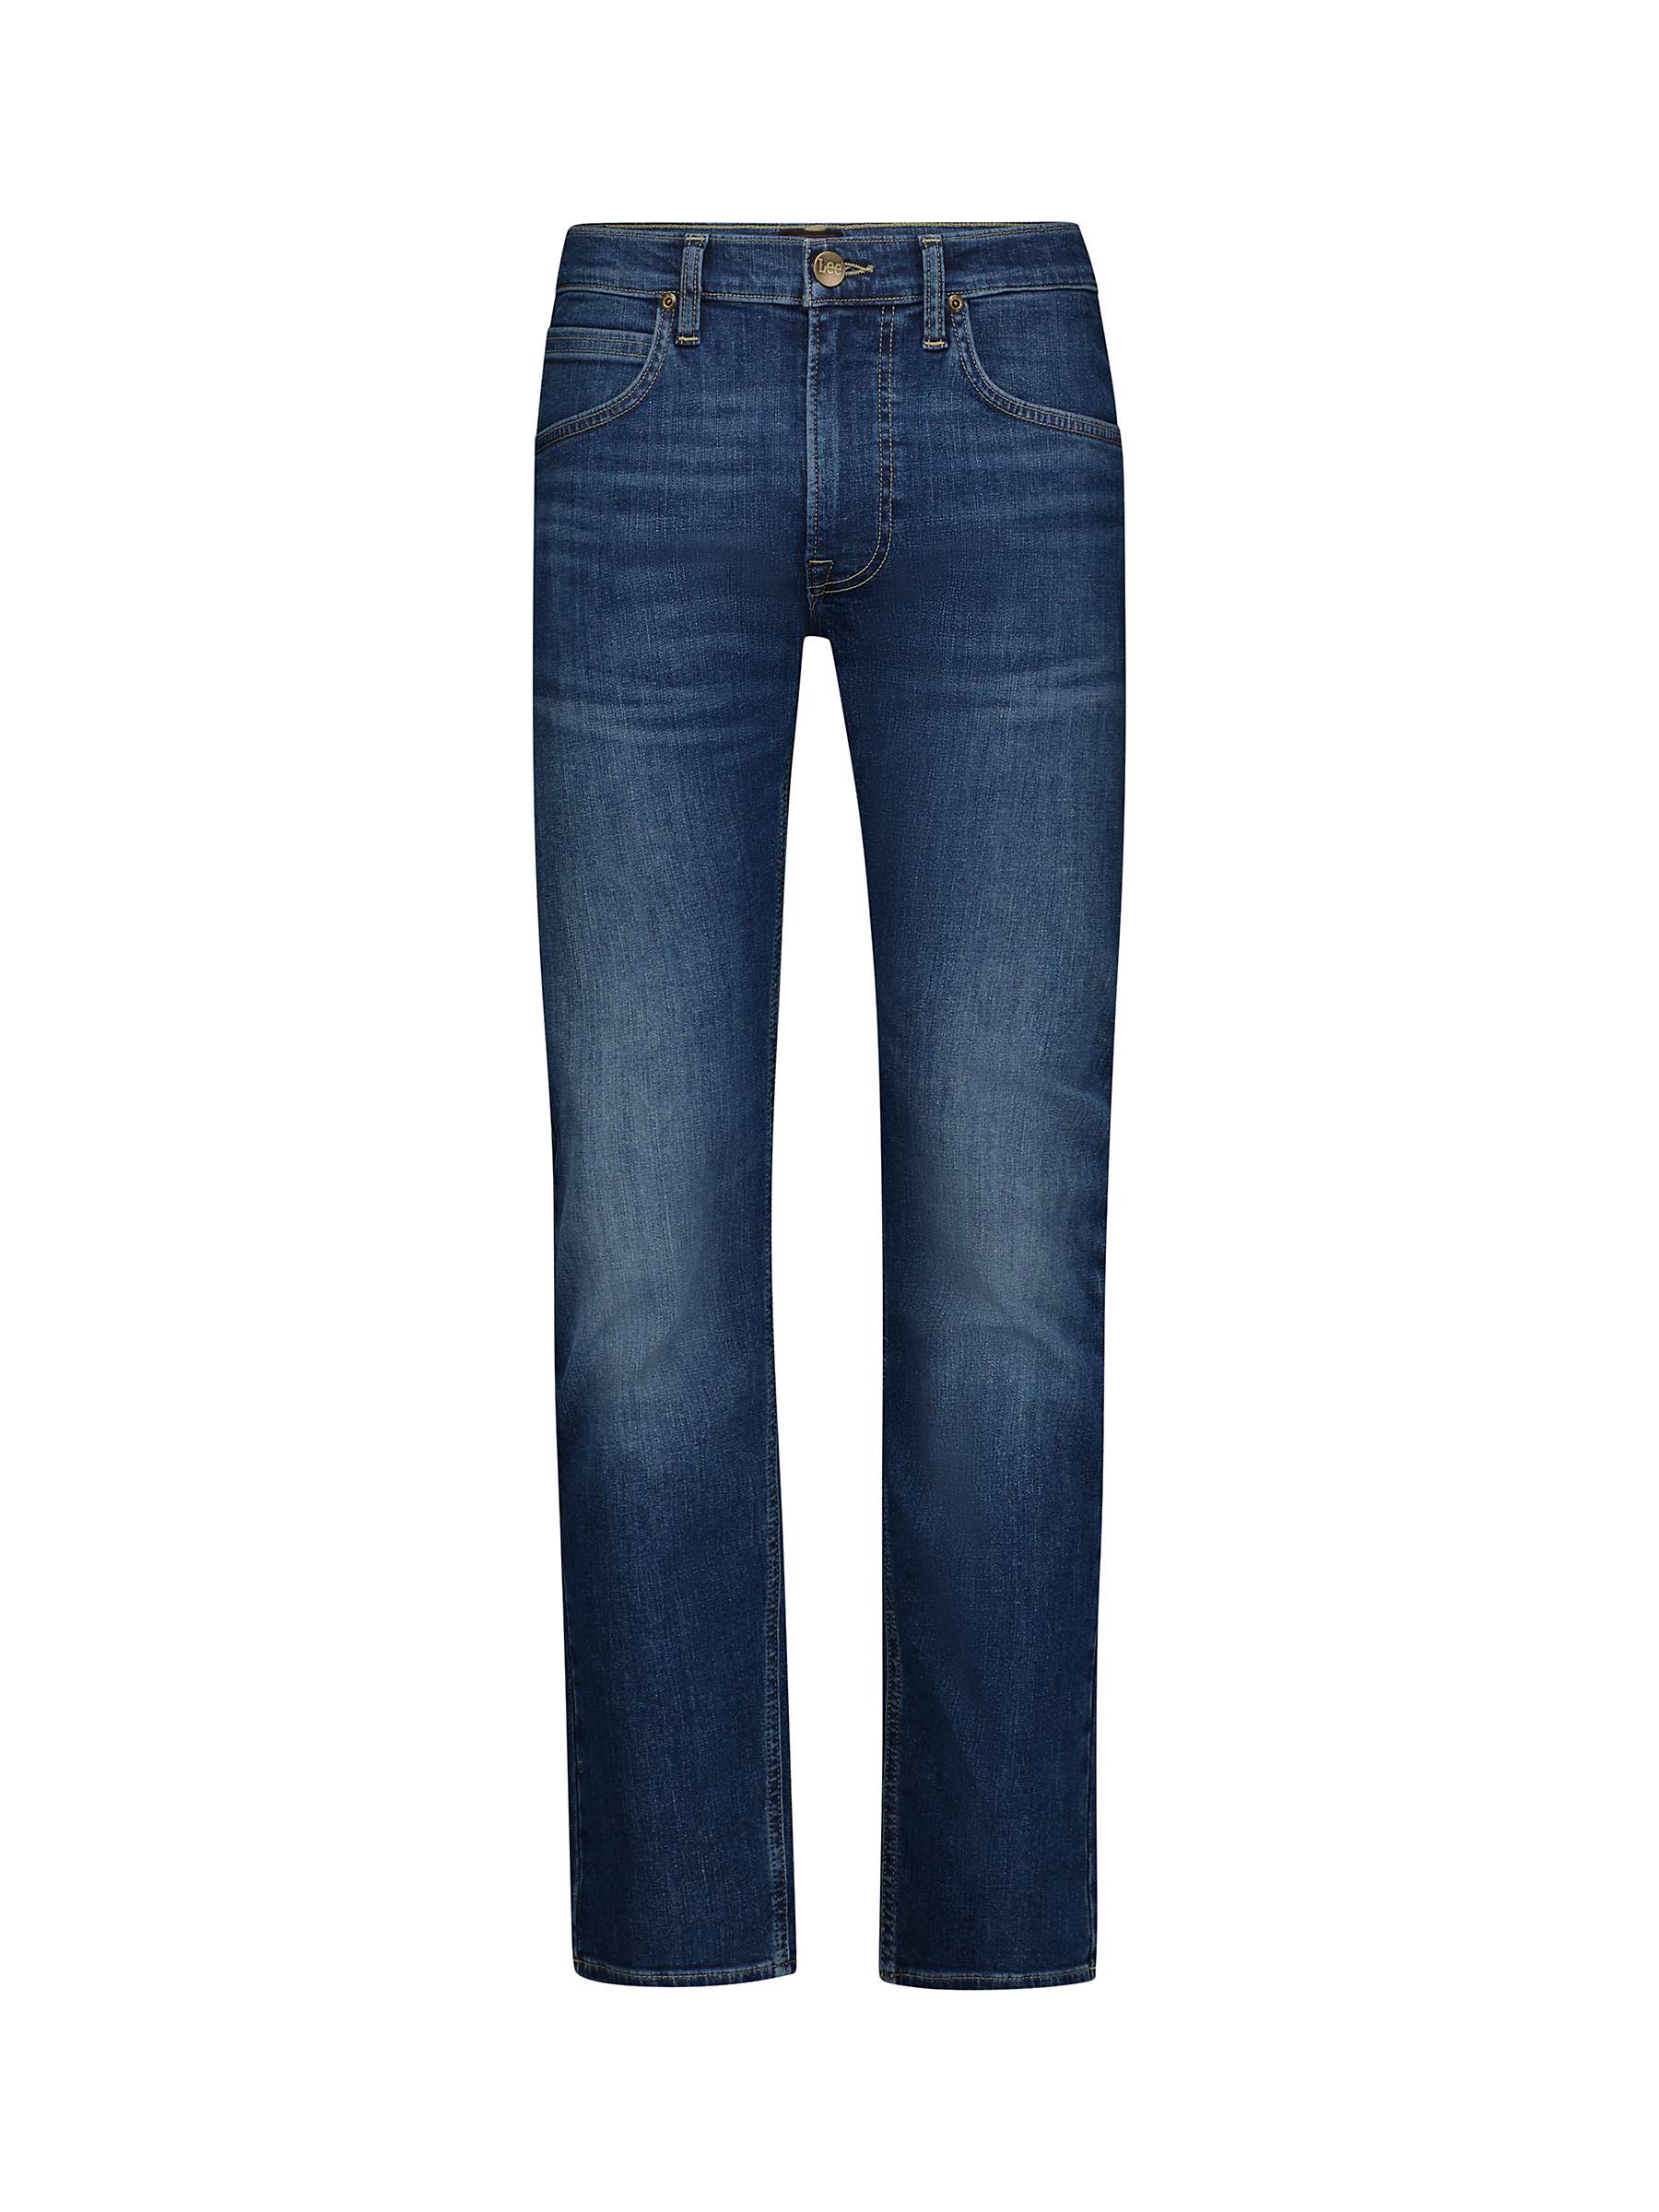 Buy Lee Luke Slim Fit Tapered Jeans, East New York Online at johnlewis.com